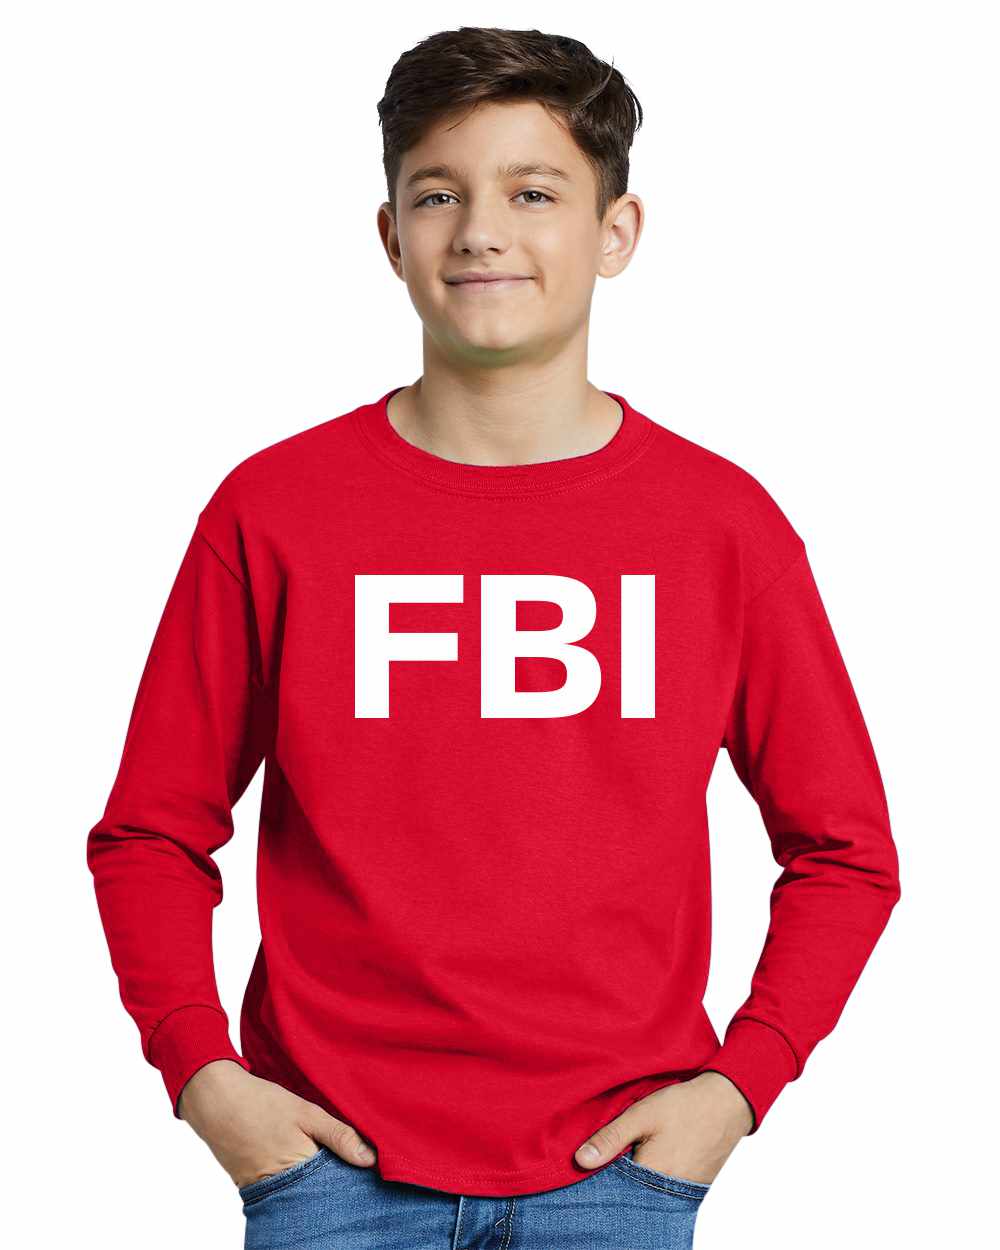 FBI on Youth Long Sleeve Shirt